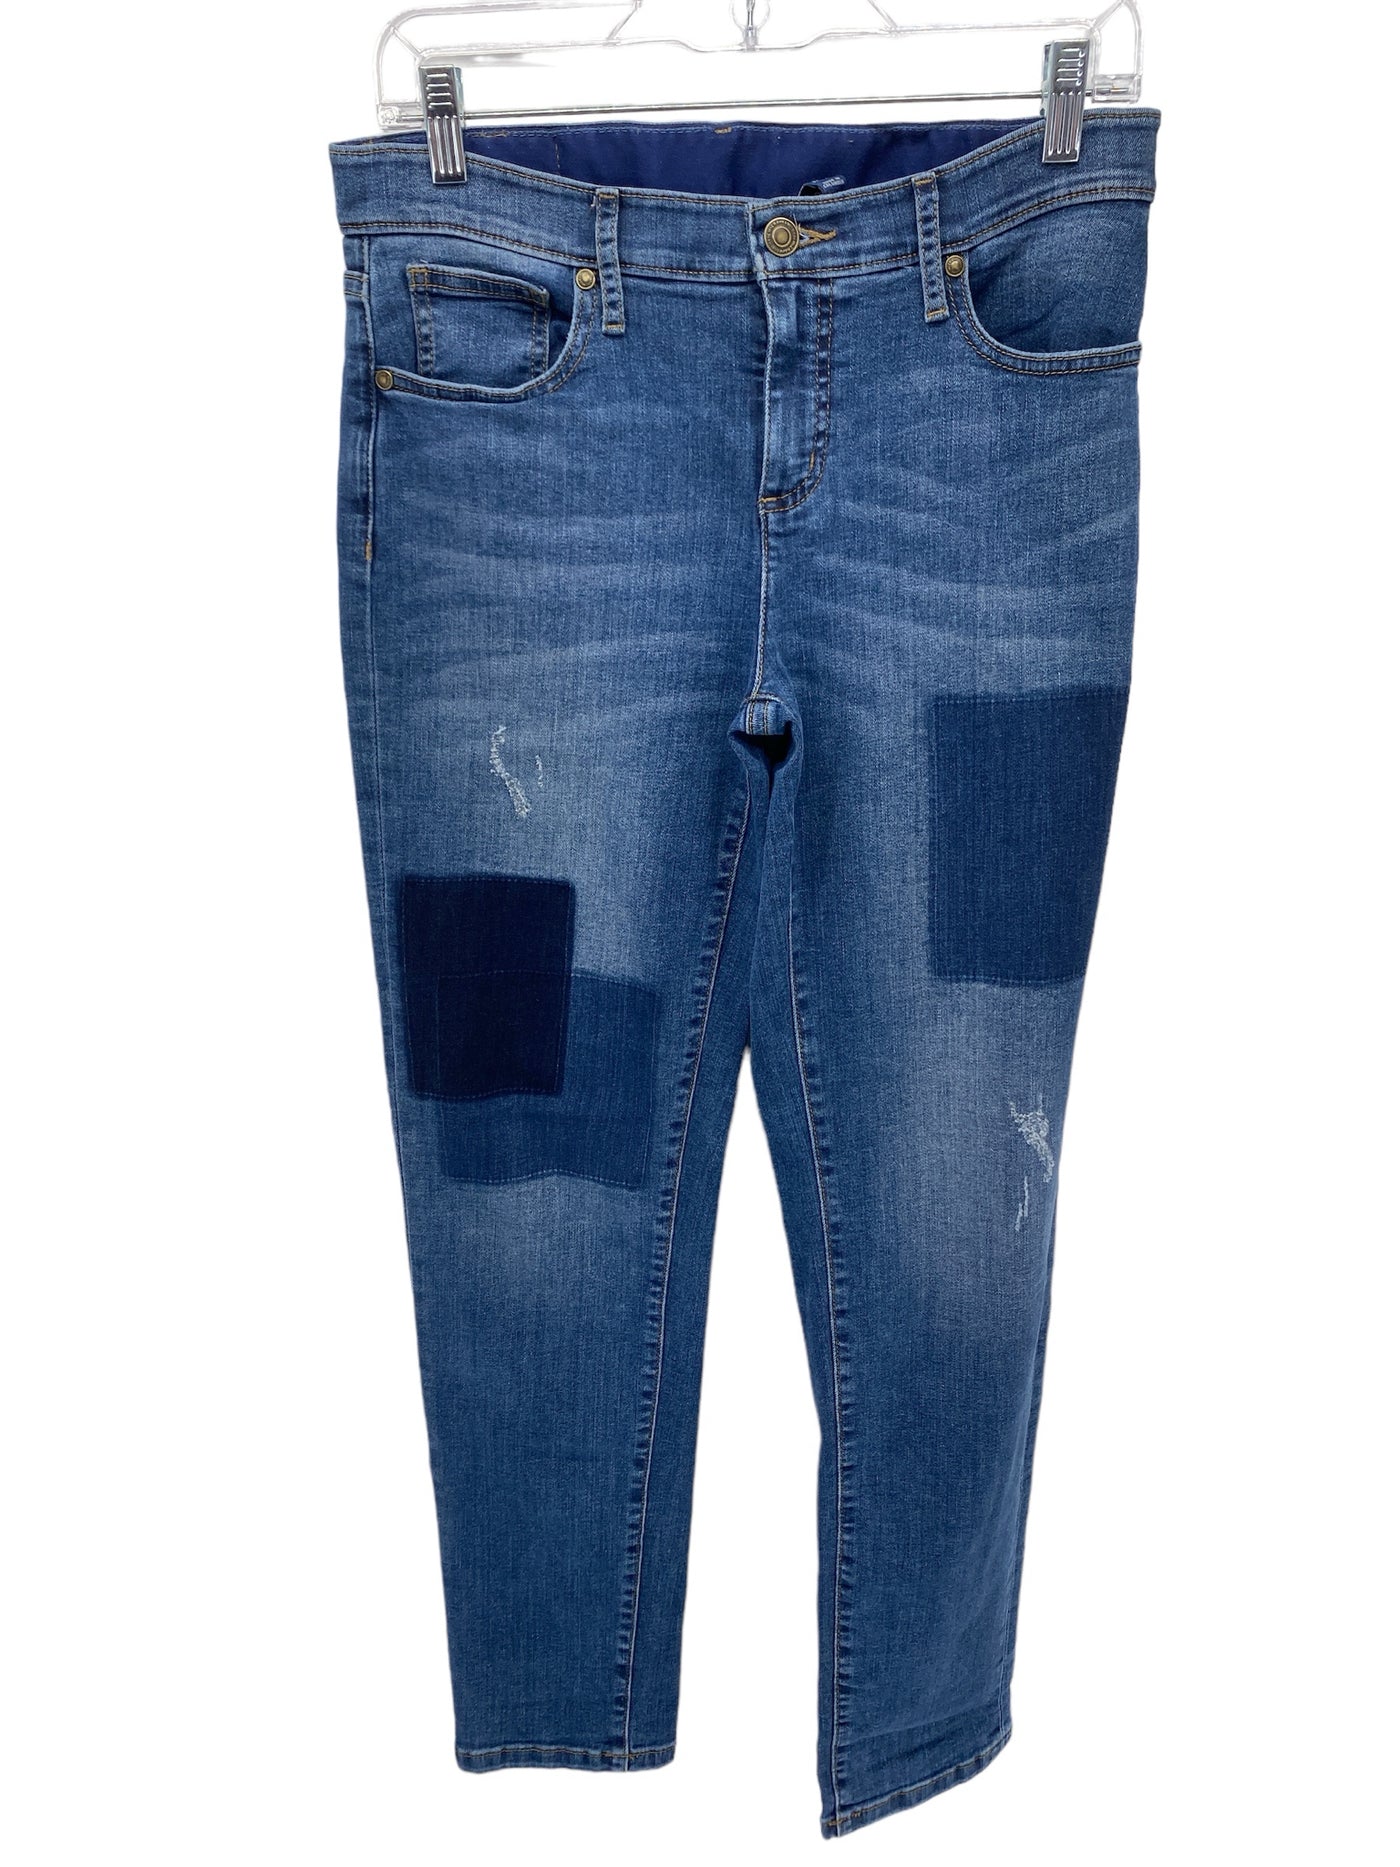 Isaac Mizrahi Misses Size 10 Denim Jeans